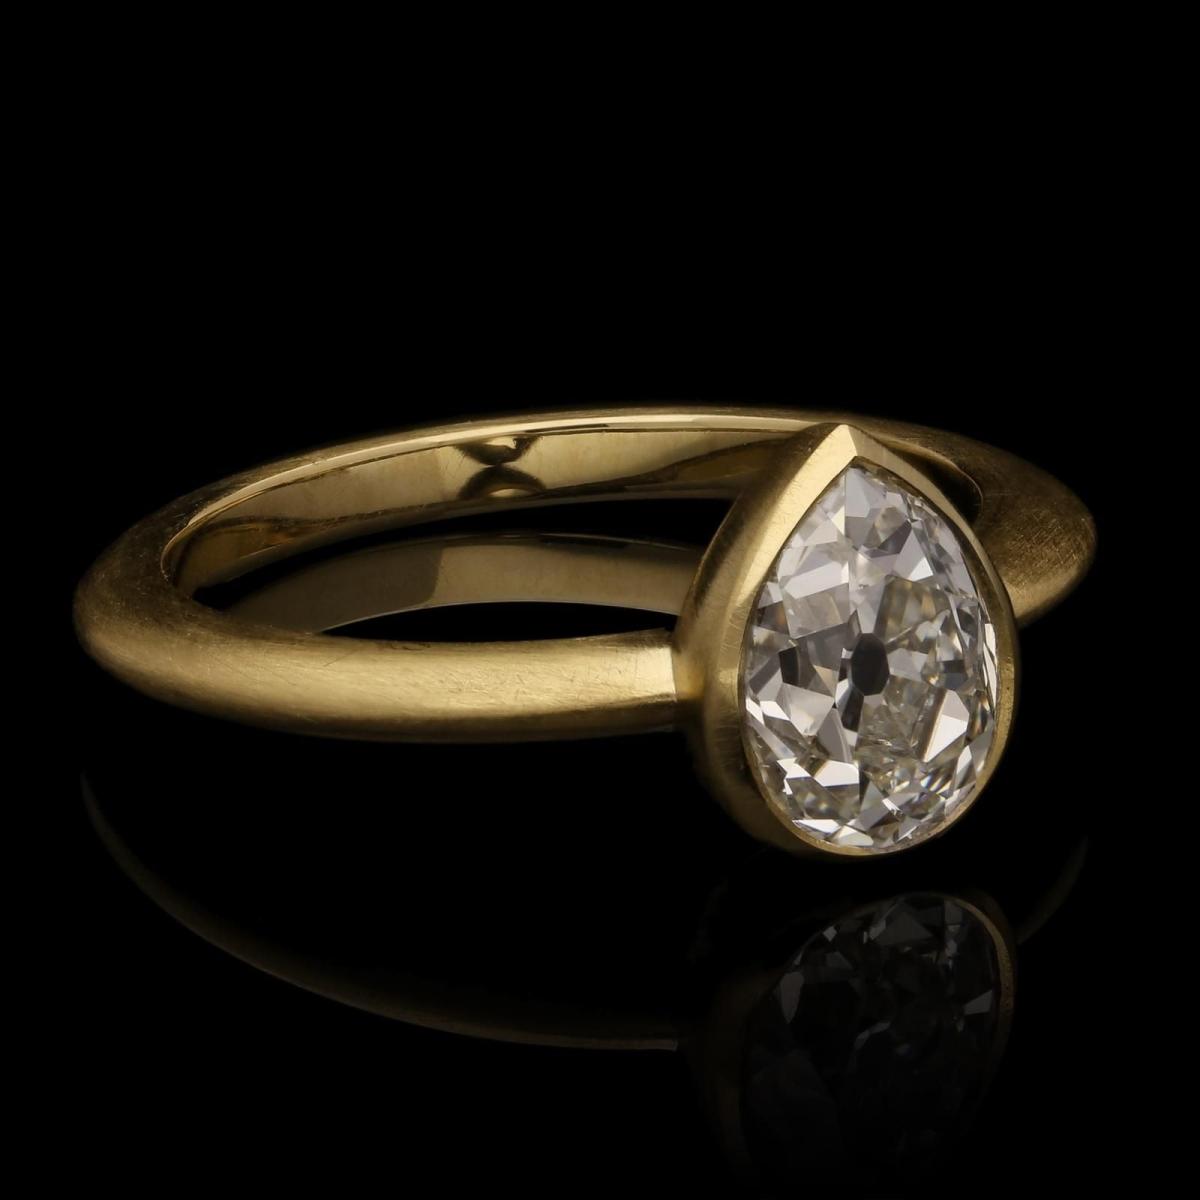 Hancocks 1.48 Carat Old Cut Pear Shape Diamond Solitaire Ring